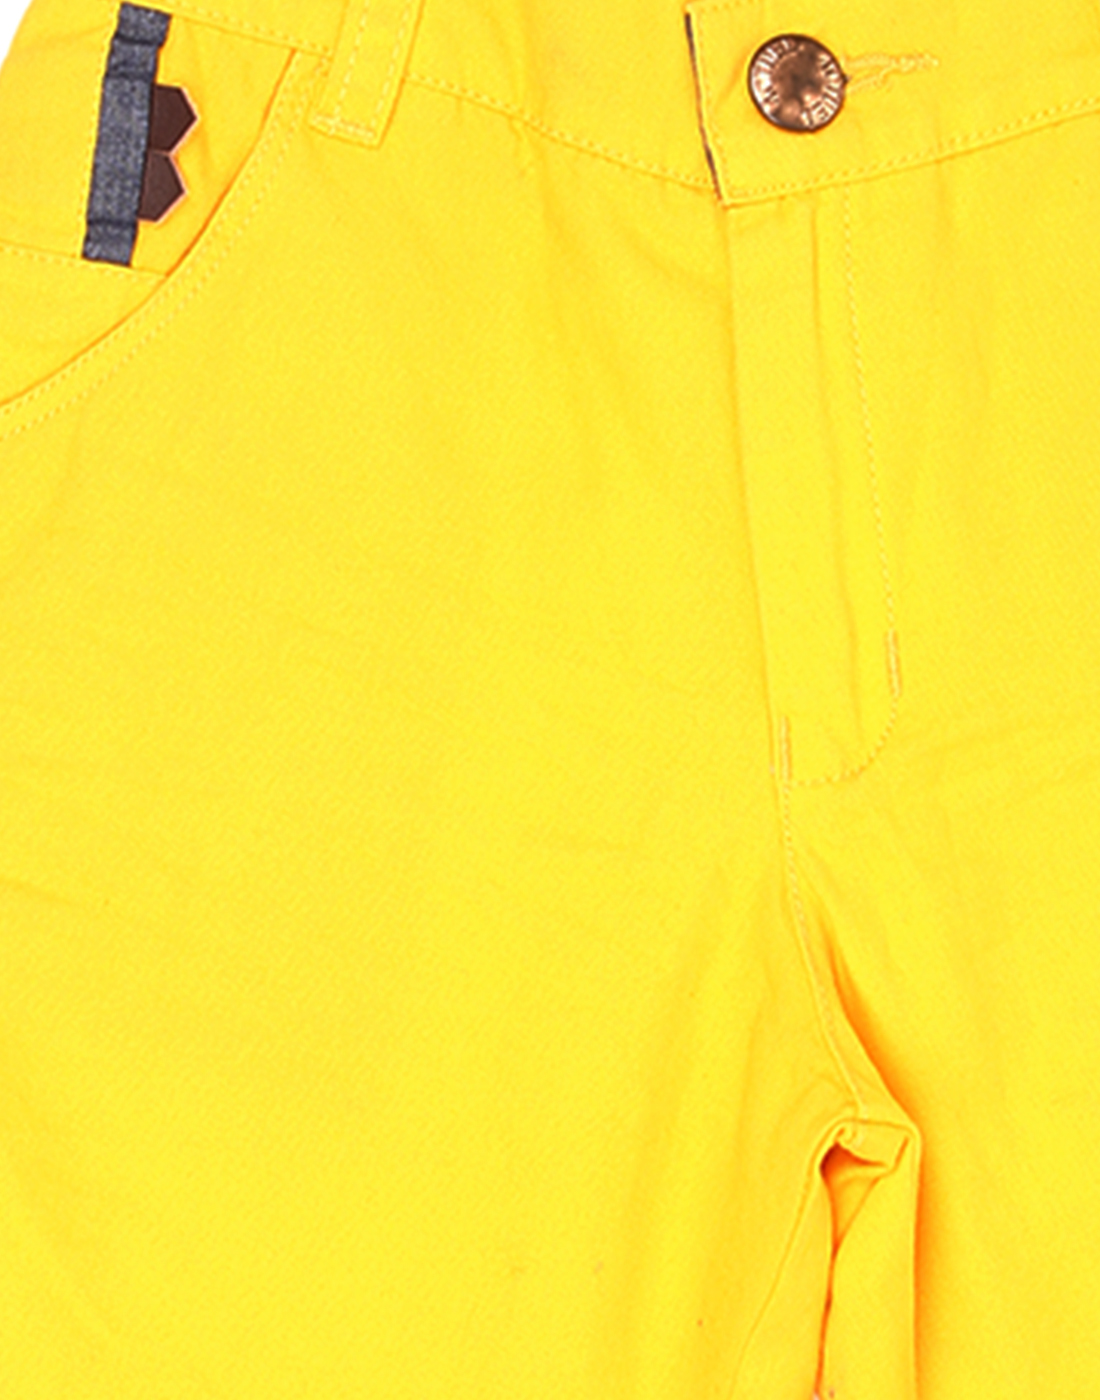 Actuel Boys Casual Wear Yellow Basic Shorts